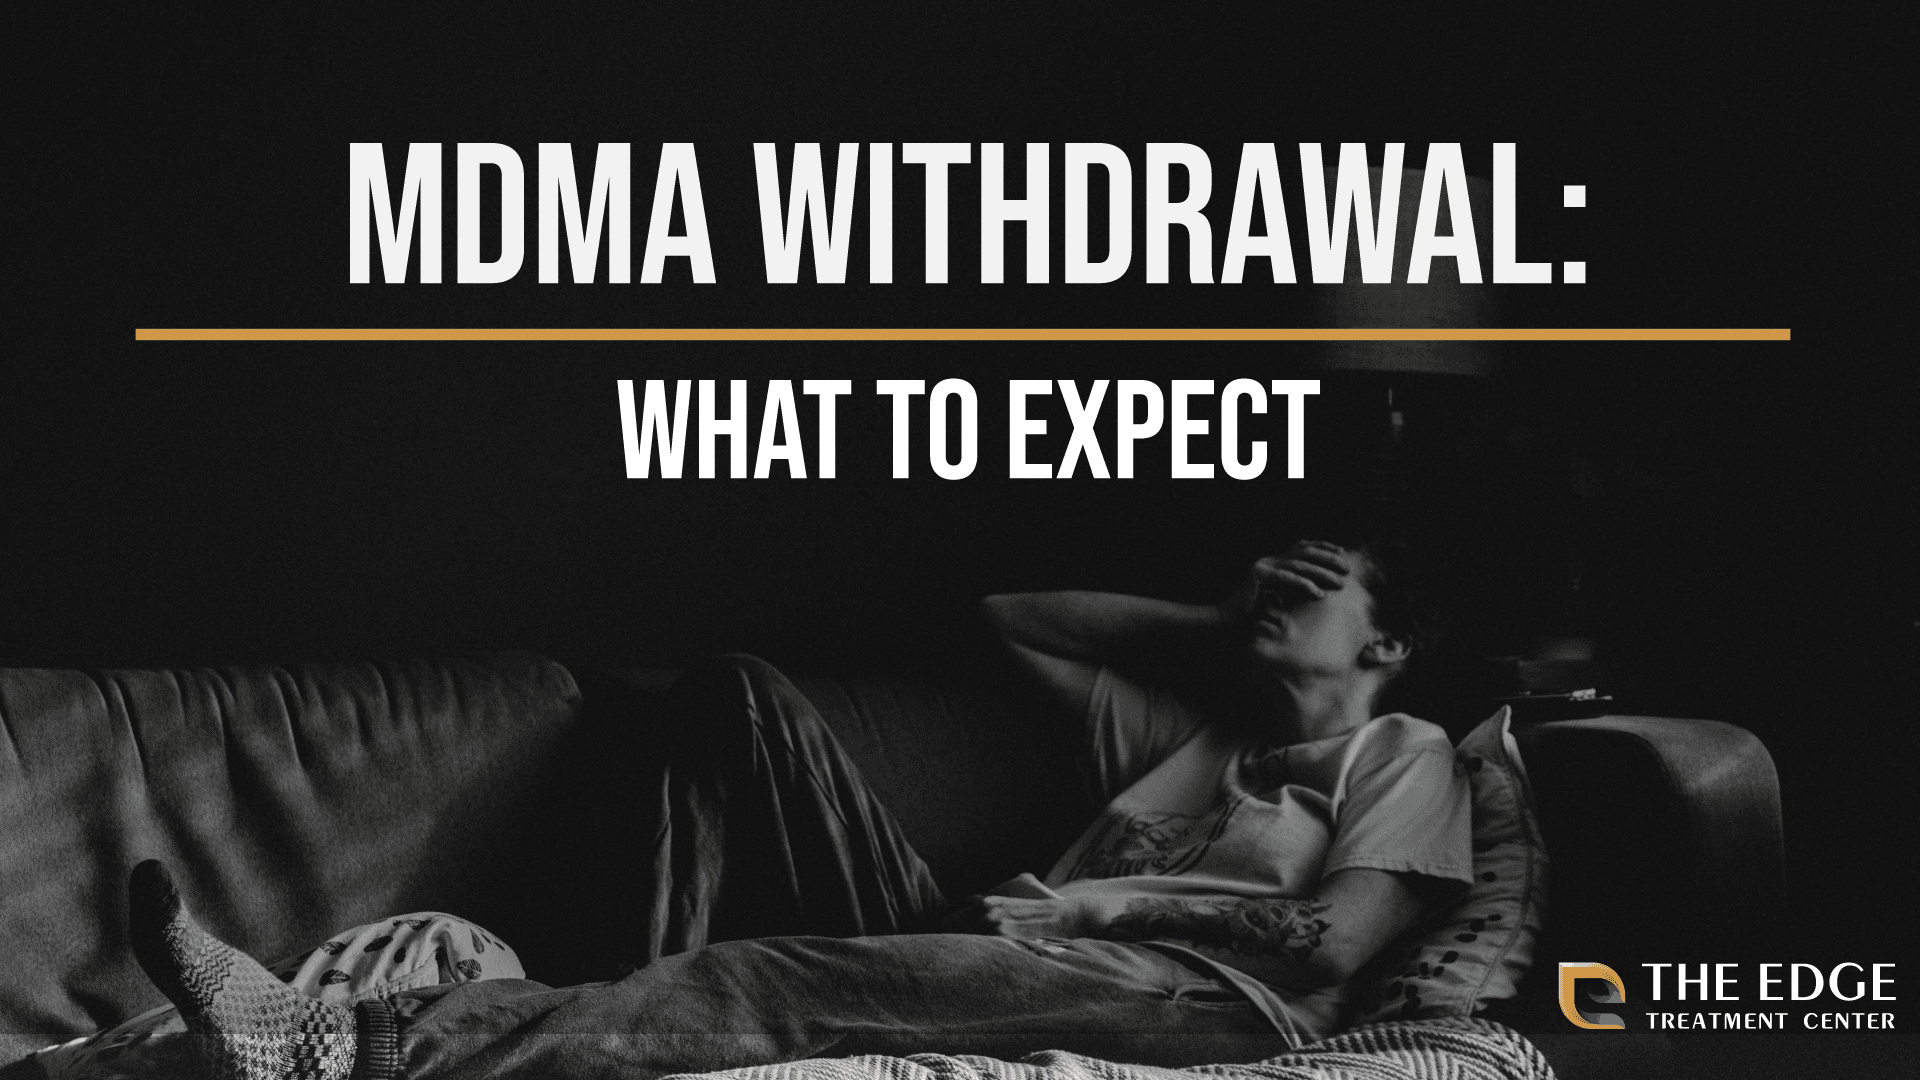 MDMA Withdrawal